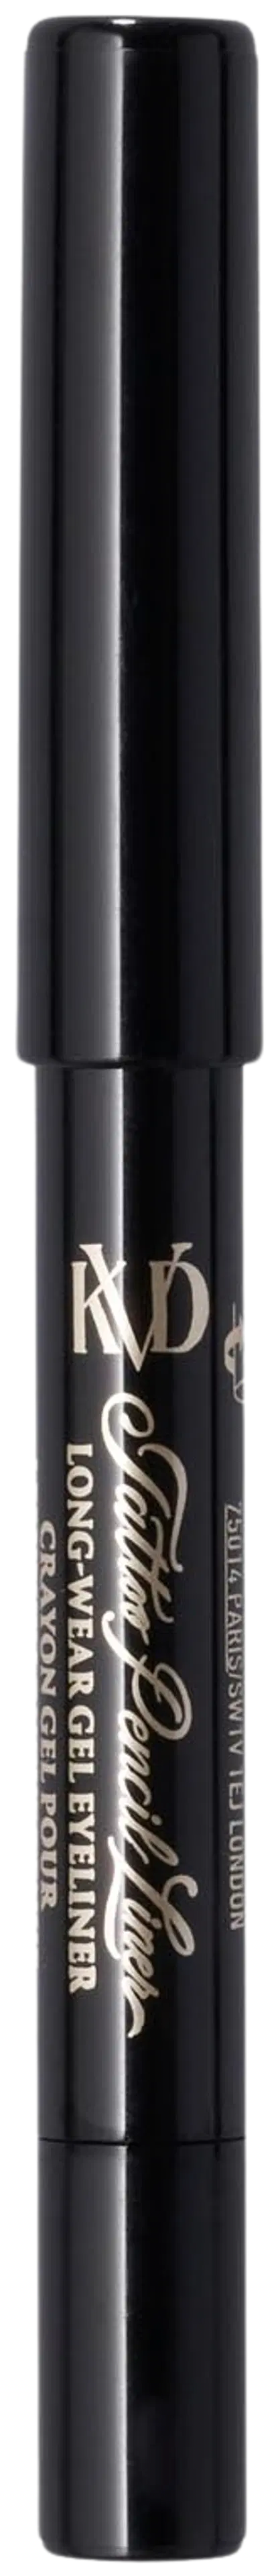 KVD Beauty Mini Tattoo Pencil Liner silmänrajauskynä 3,5 g